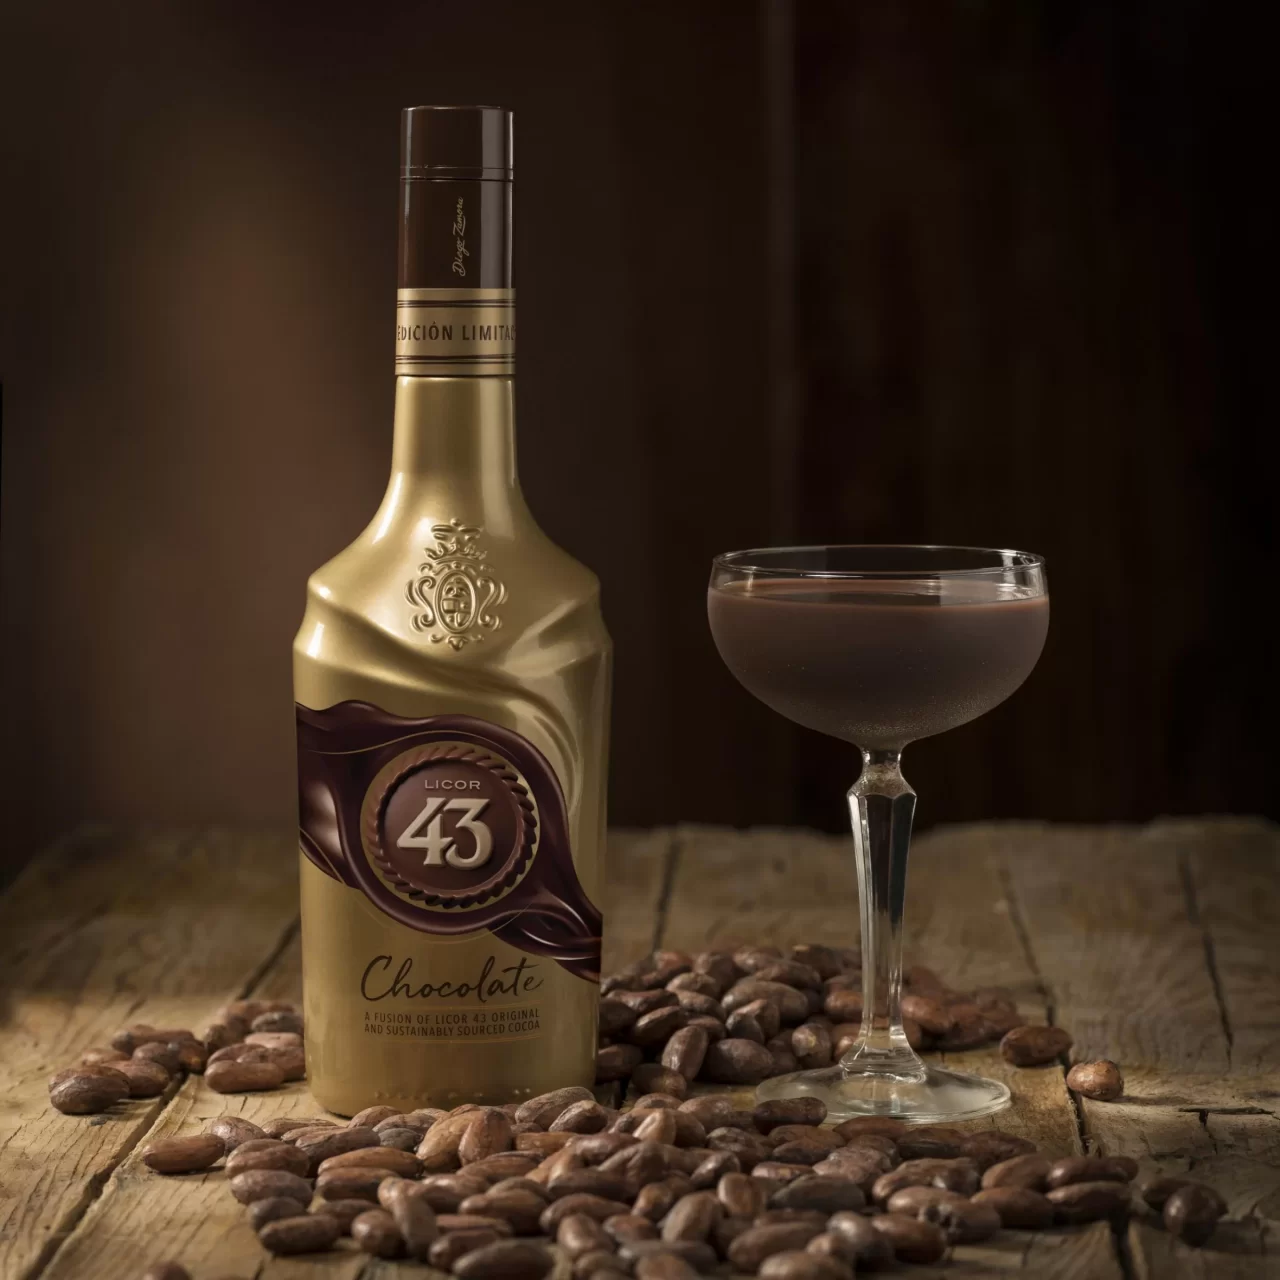 Zamora Company USA Introduces Licor 43 Chocolate in the U.S.